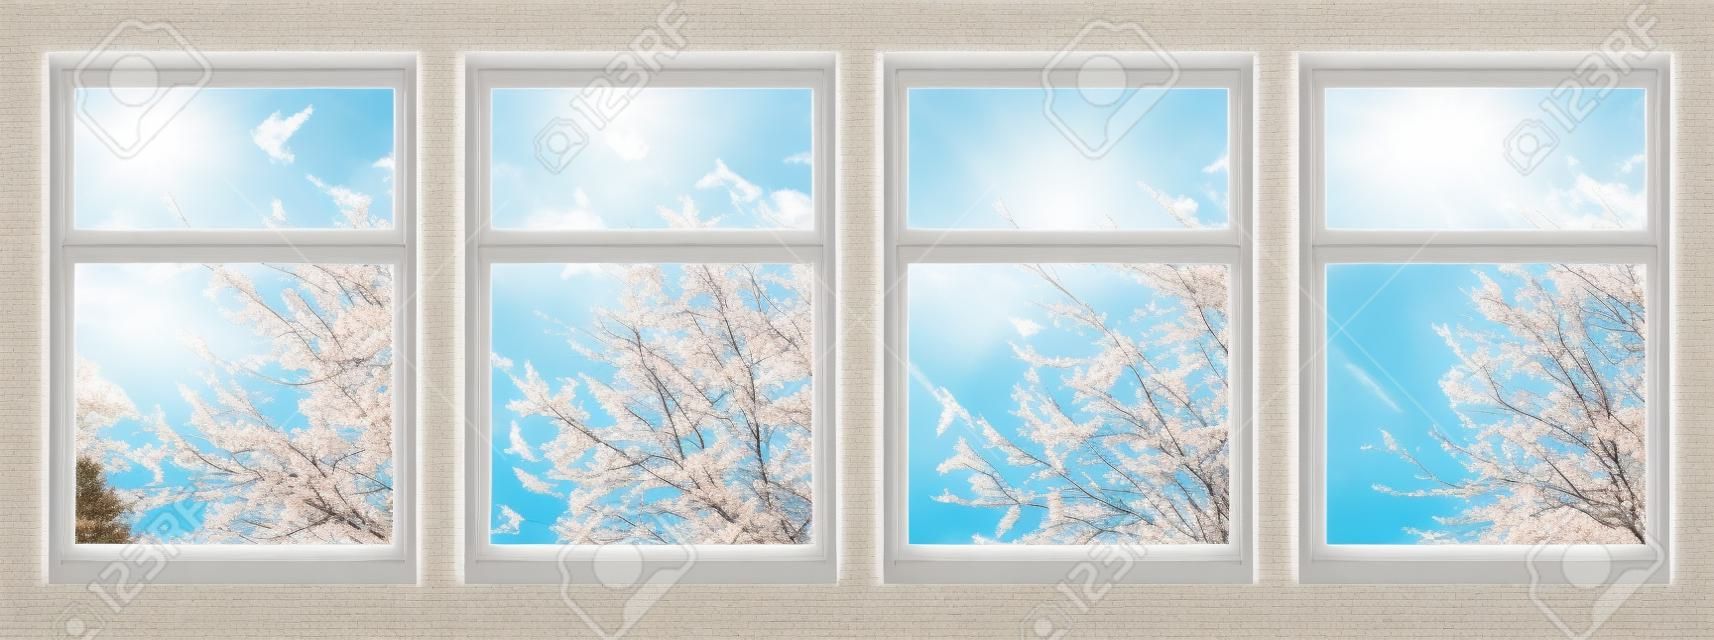 Four Season Windows: Spring, Summer, Autumn and Winter 